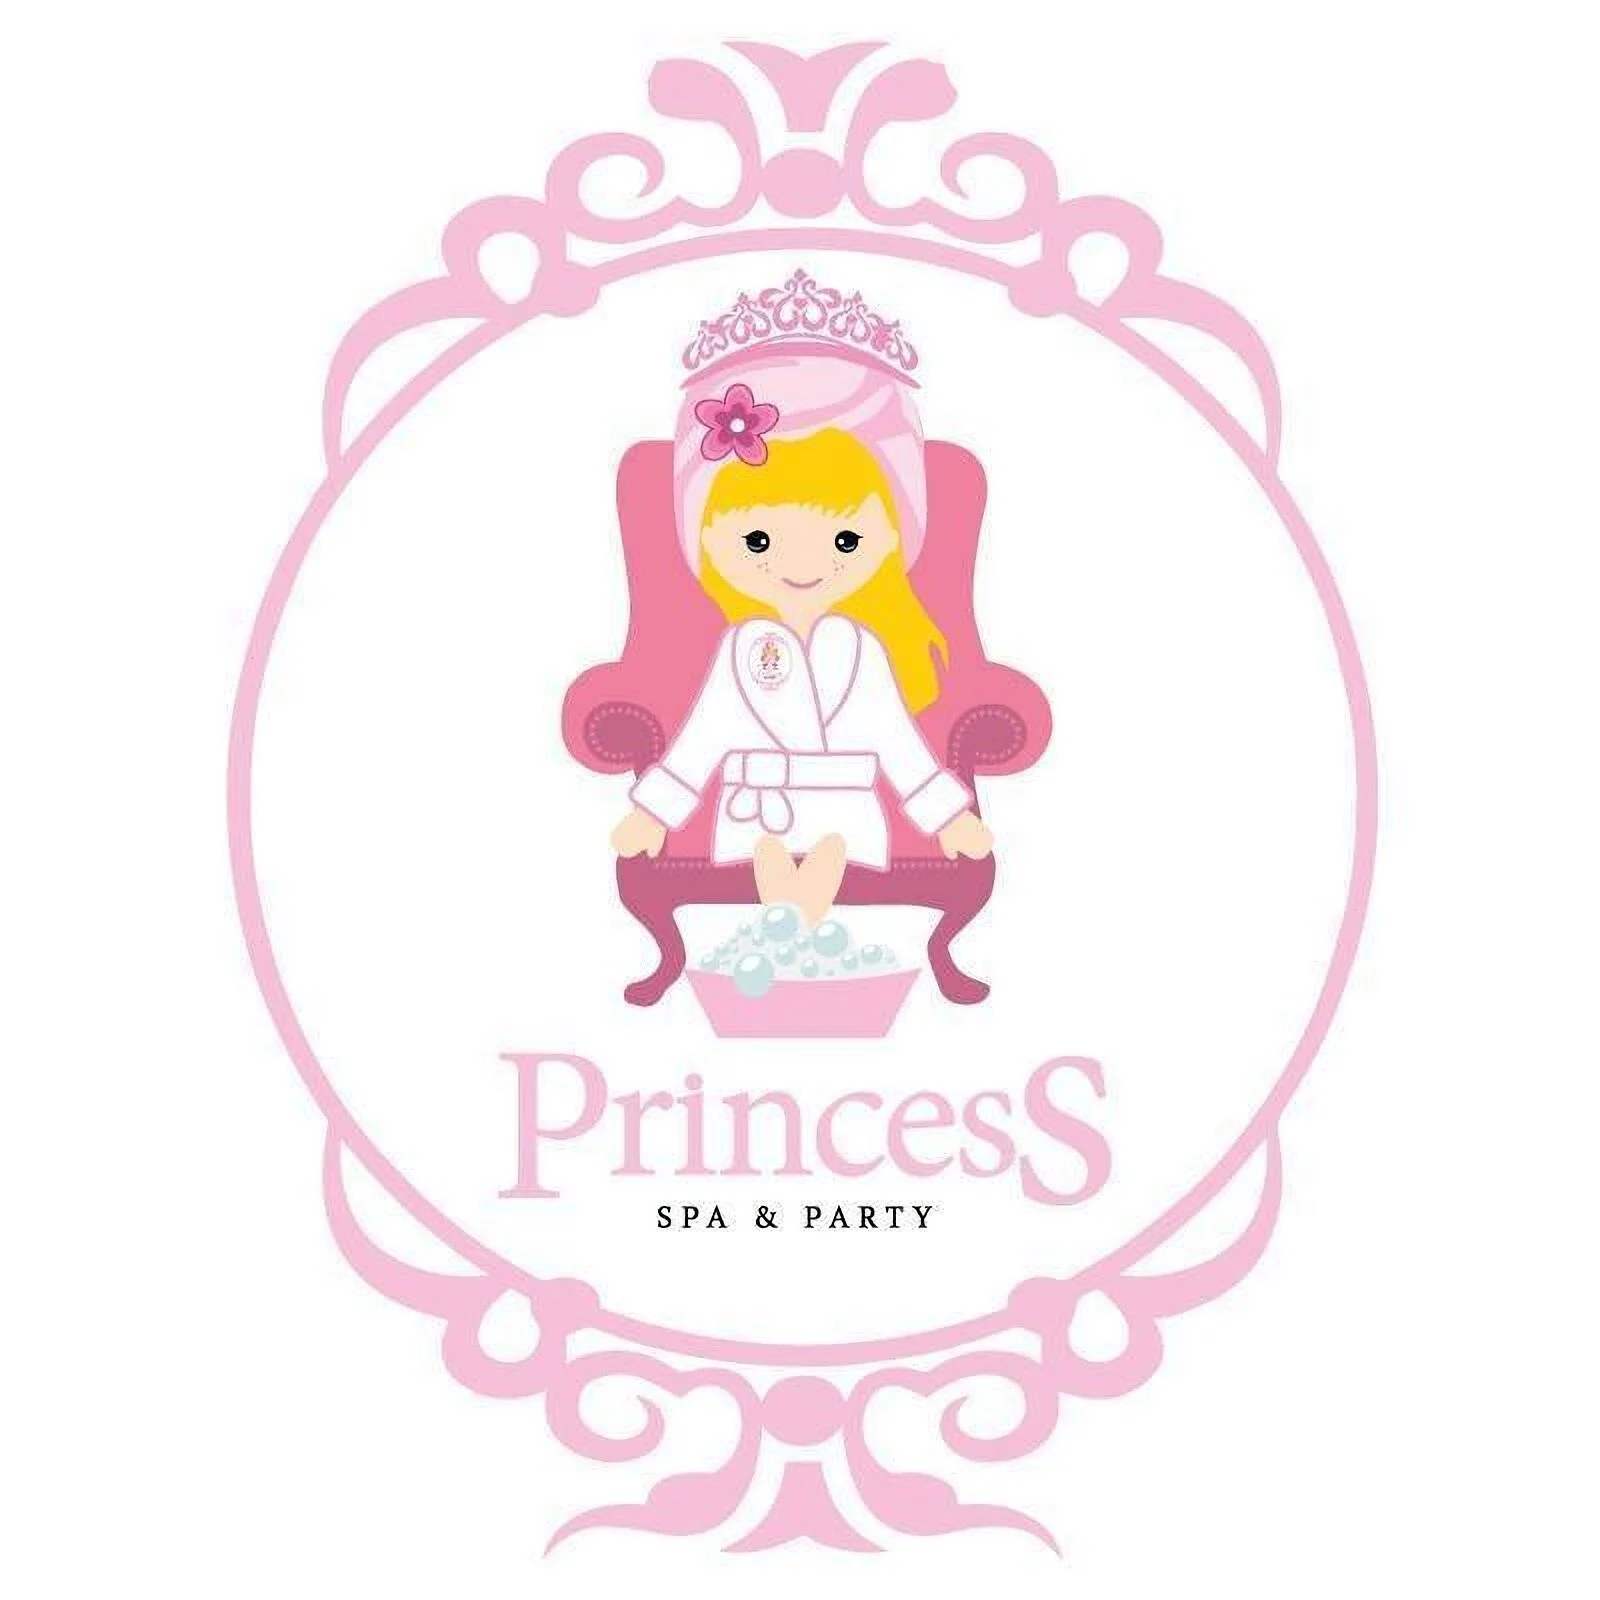 Spa-princess-spa-party-5331